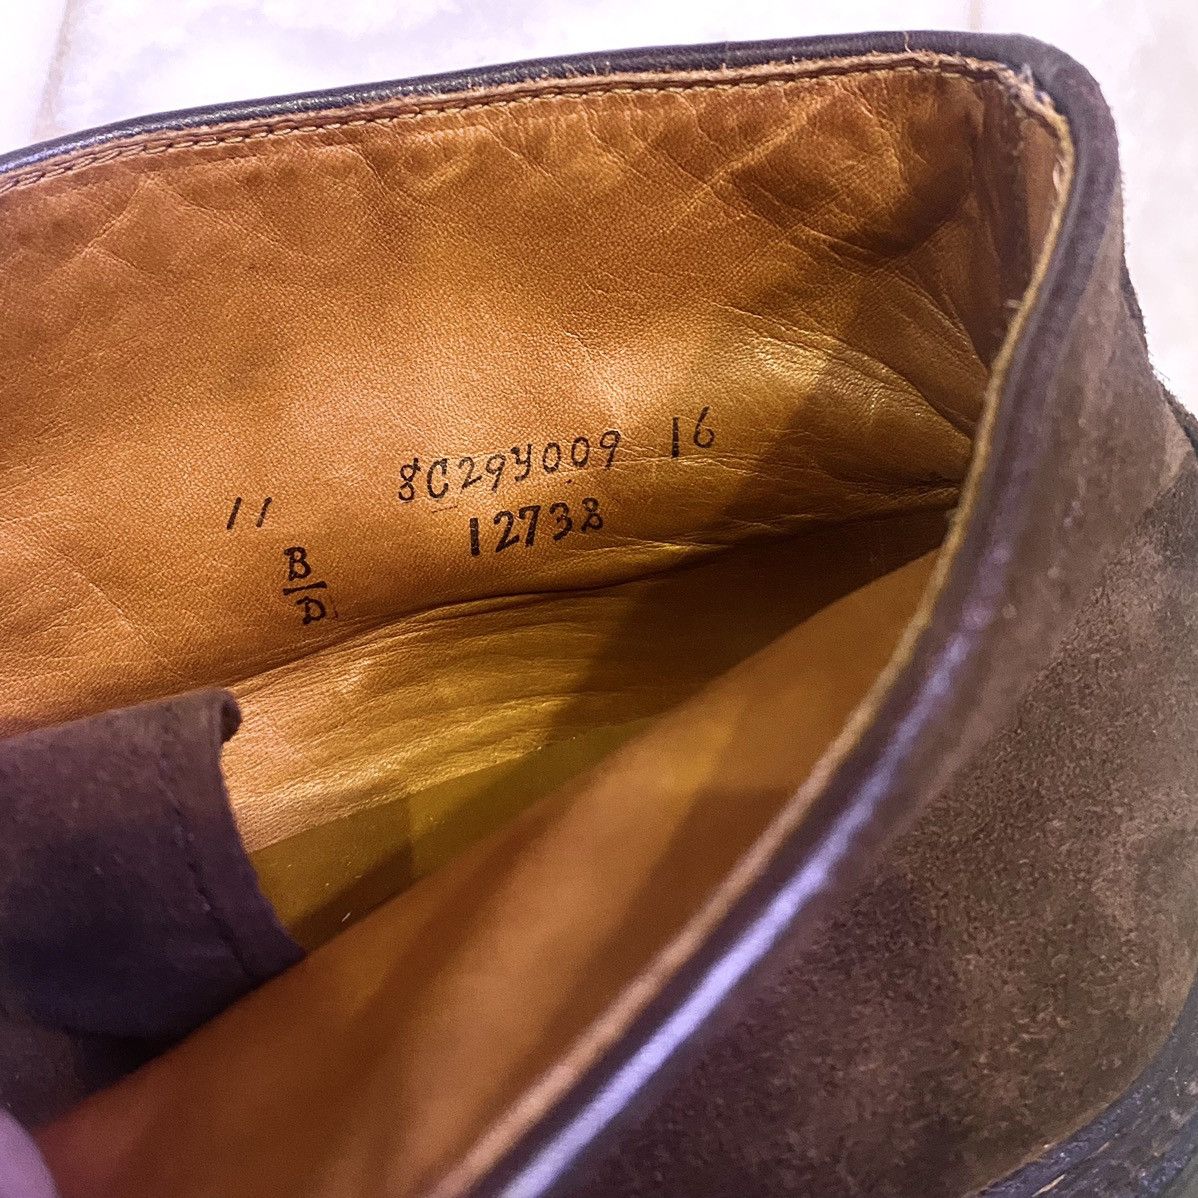 Alden Alden Chocolate Dark Brown Suede Chukka Boots on lug sole Size US 11.5 / EU 44-45 - 7 Preview